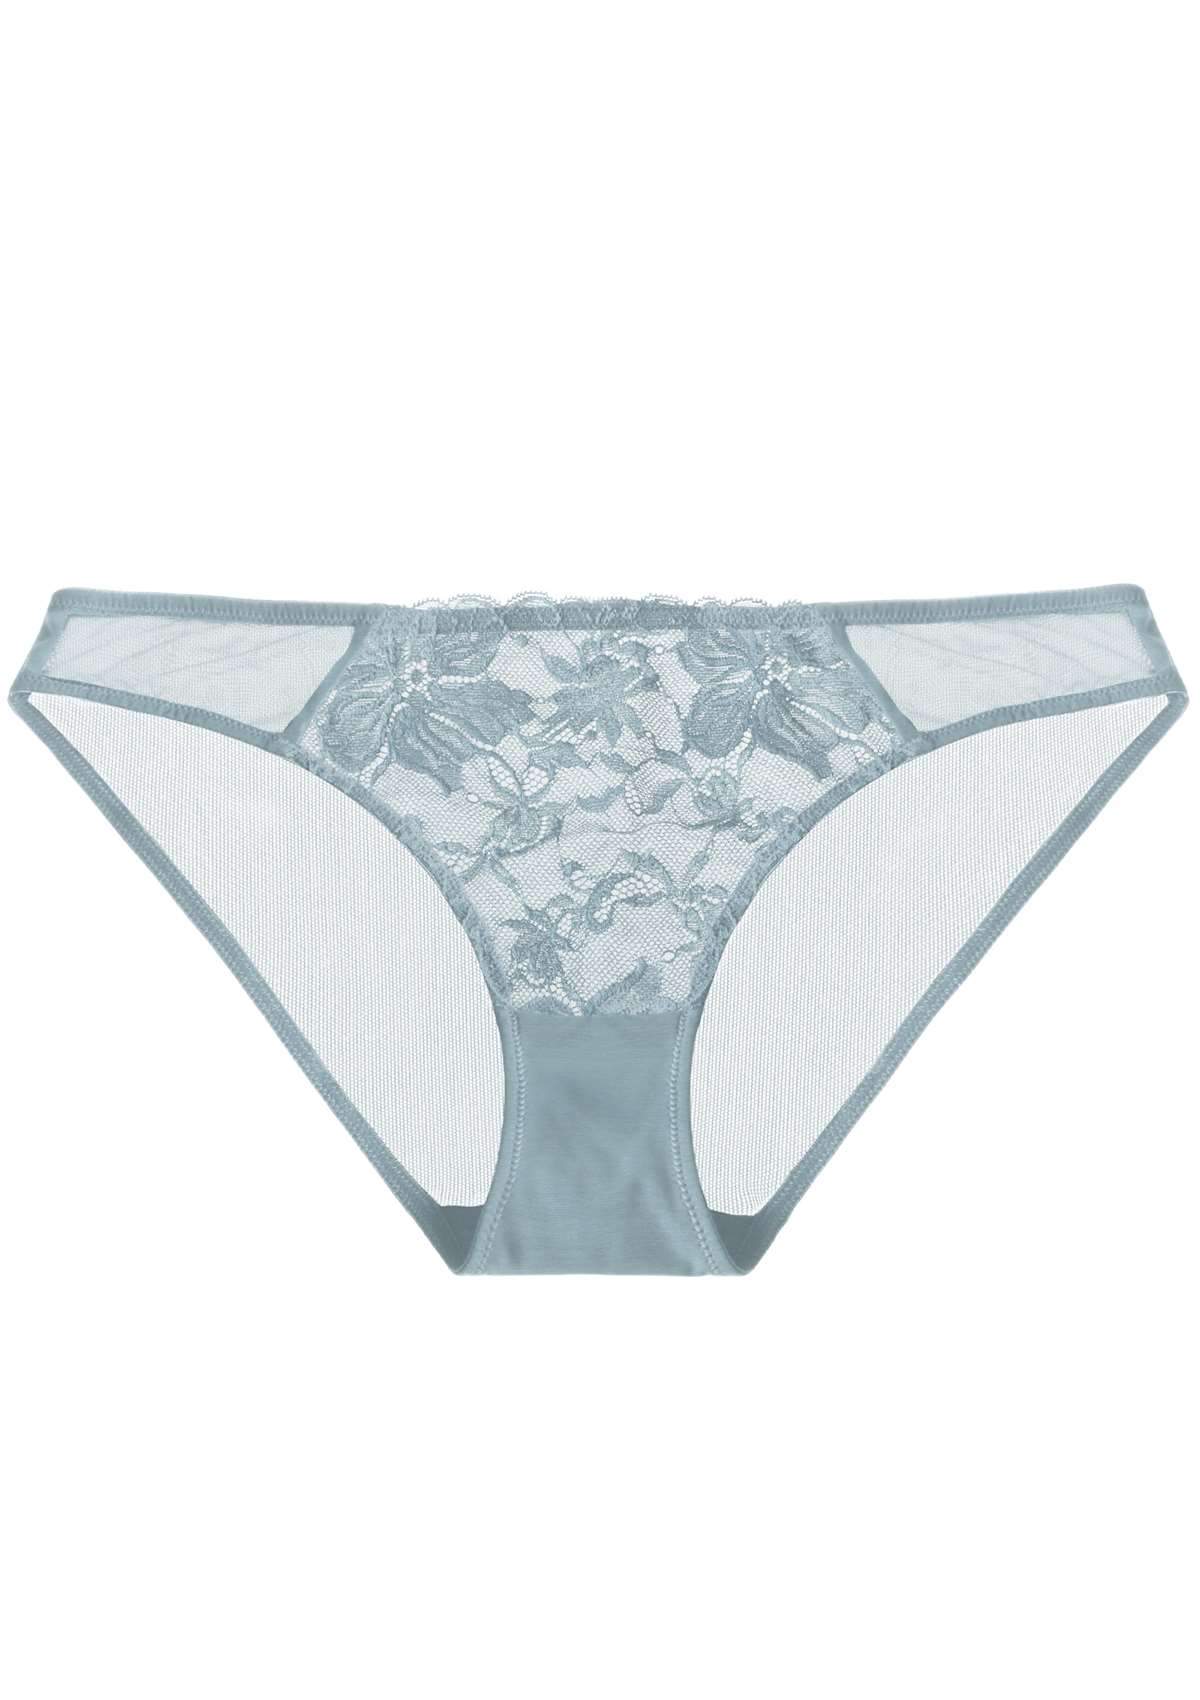 HSIA Breathable Sexy Feminine Lace Mesh Bikini Underwear - XXL / Blue